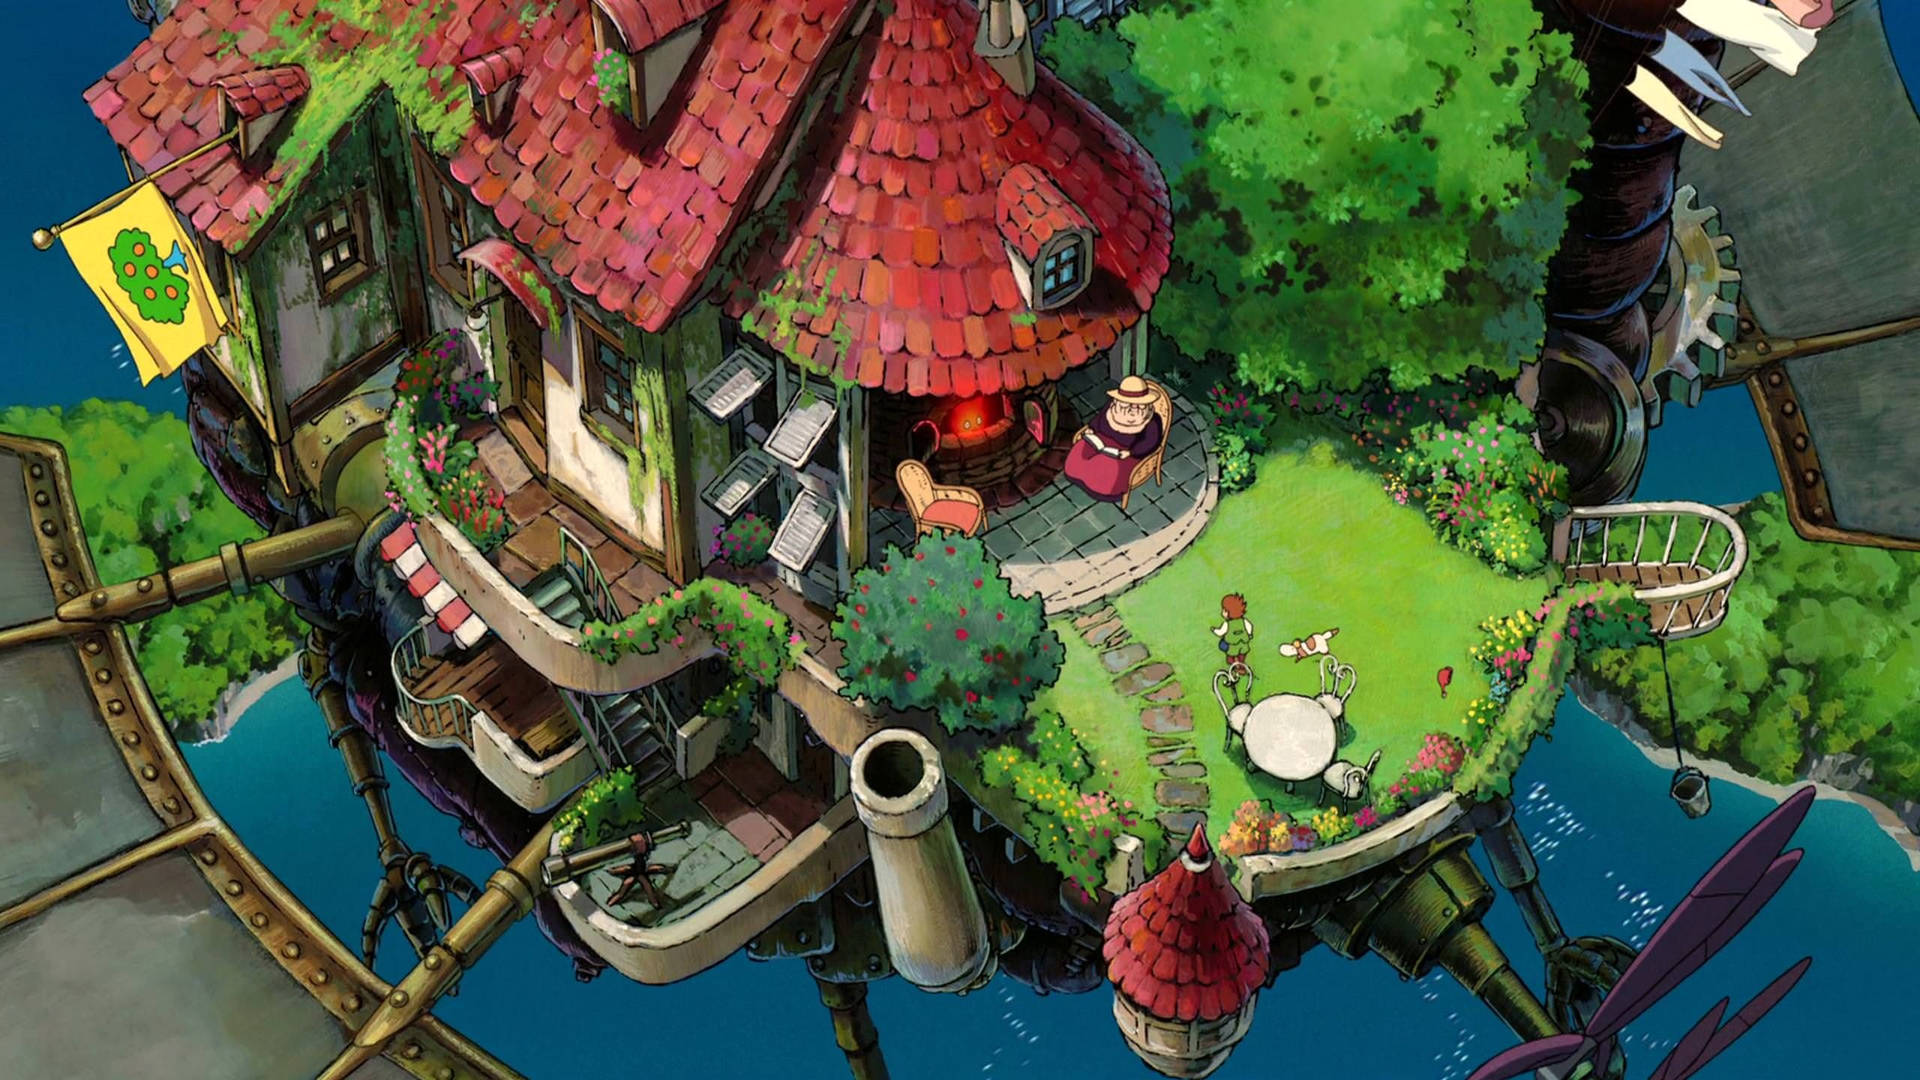 Studio Ghibli Howl's Moving Castle